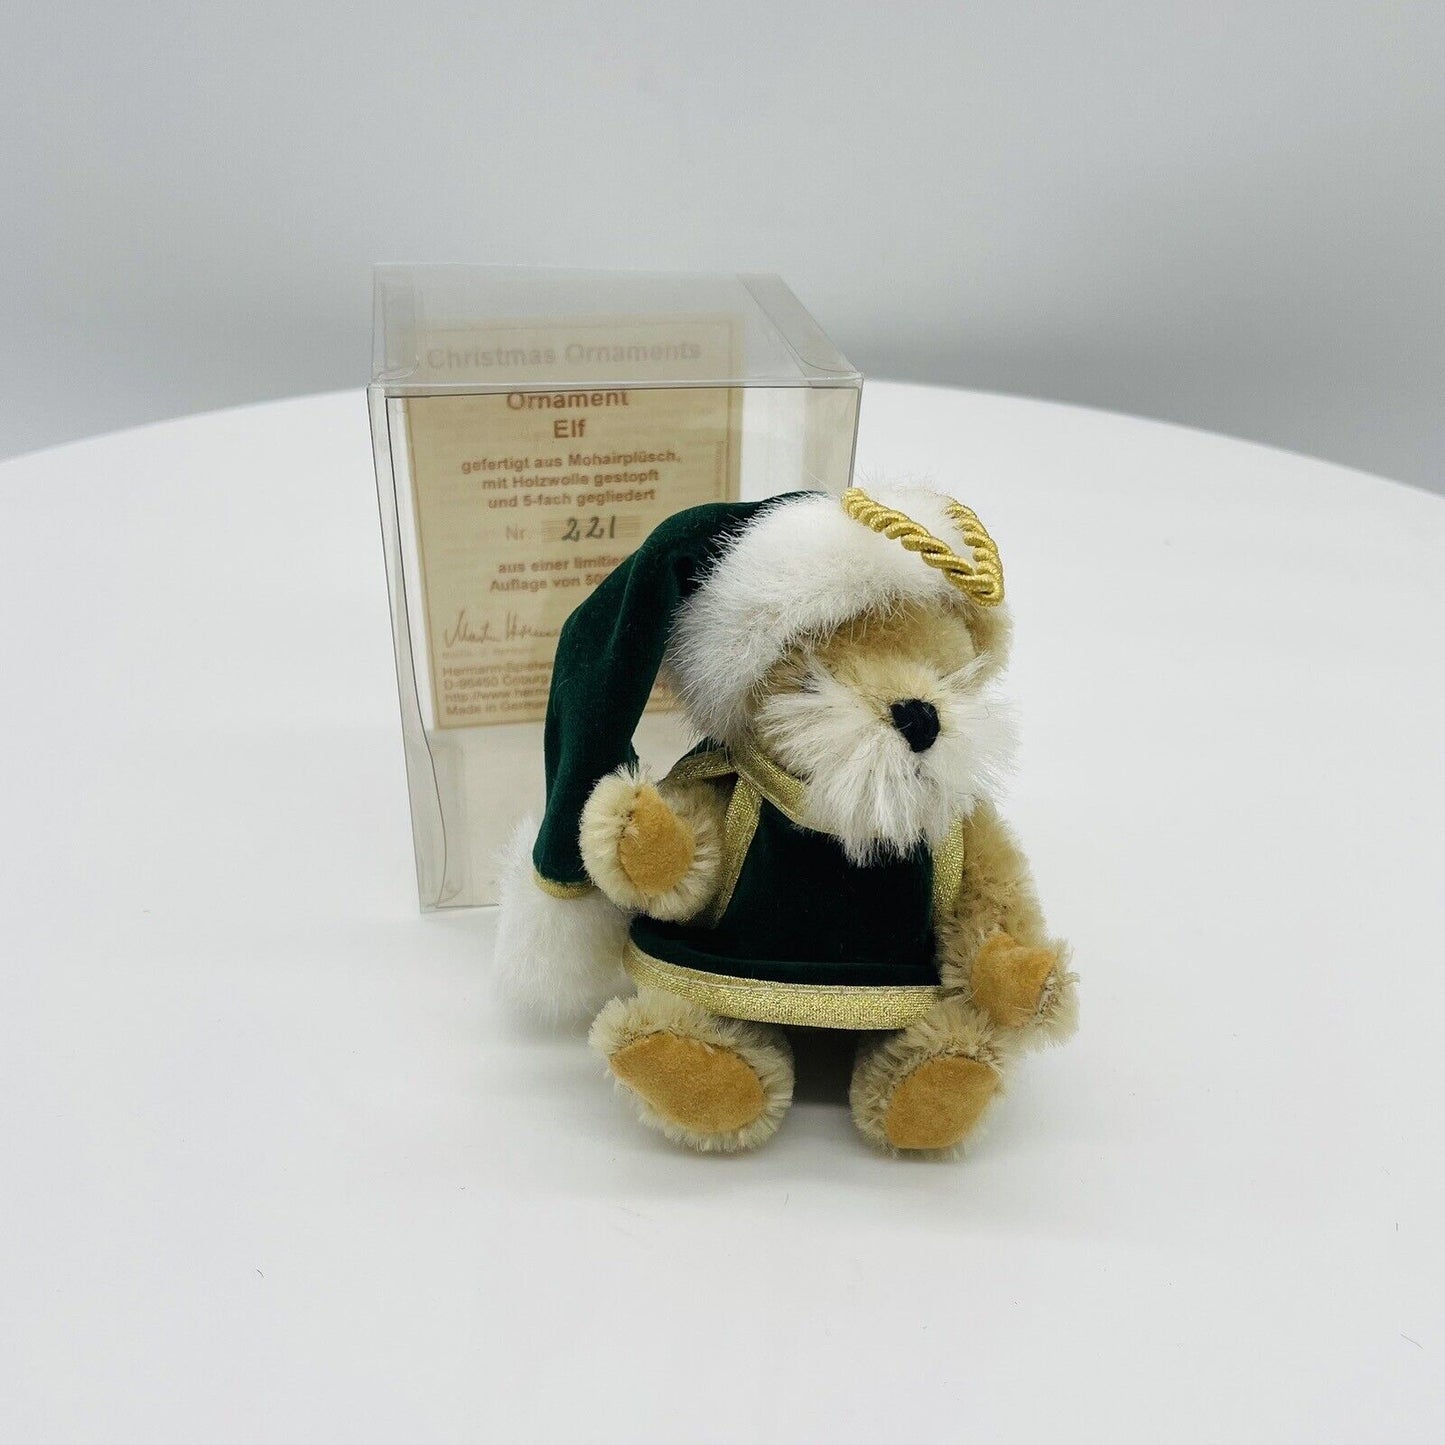 Hermann Coburg Weihnachtsornament Teddybär Elf limitiert 500 11cm Mohair